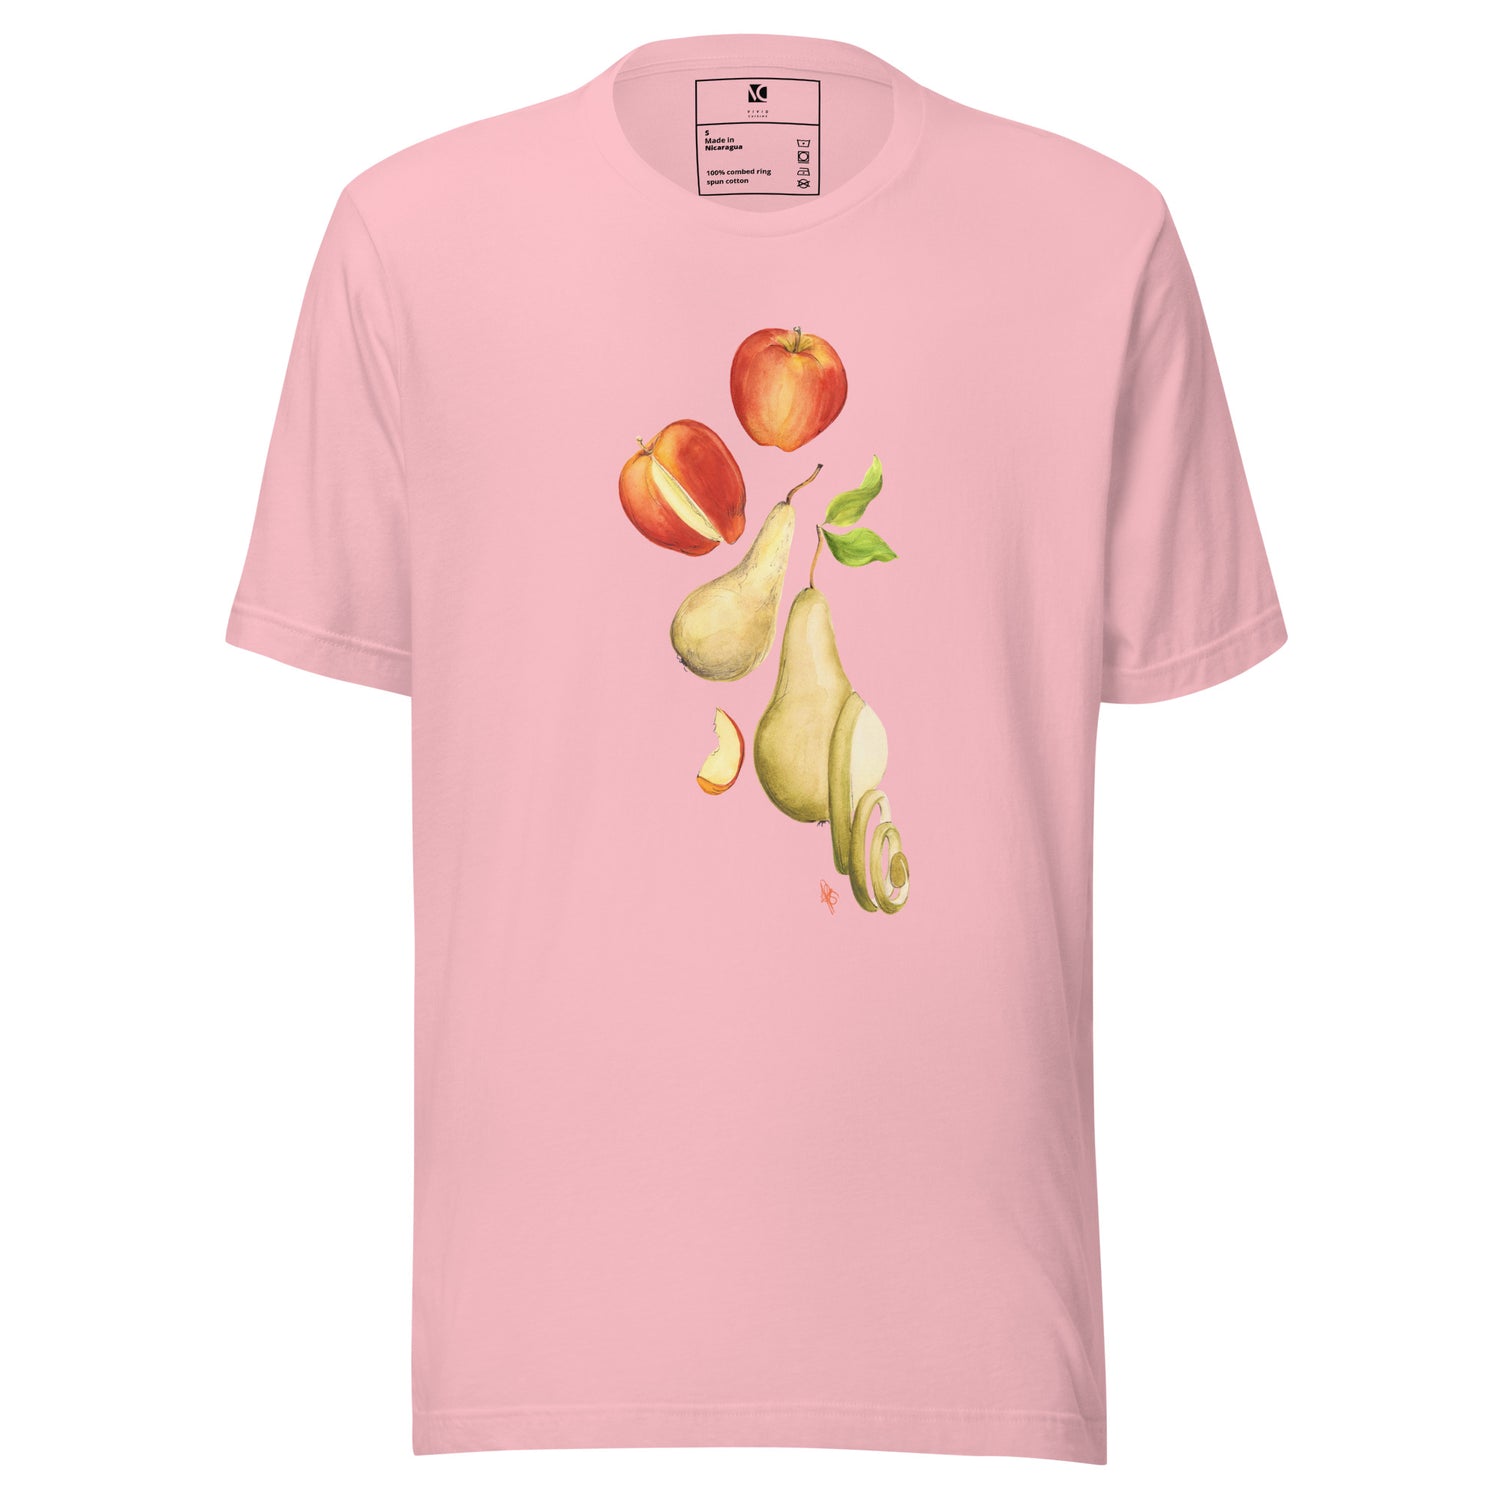 Apples &amp; Pears - Unisex T-Shirt